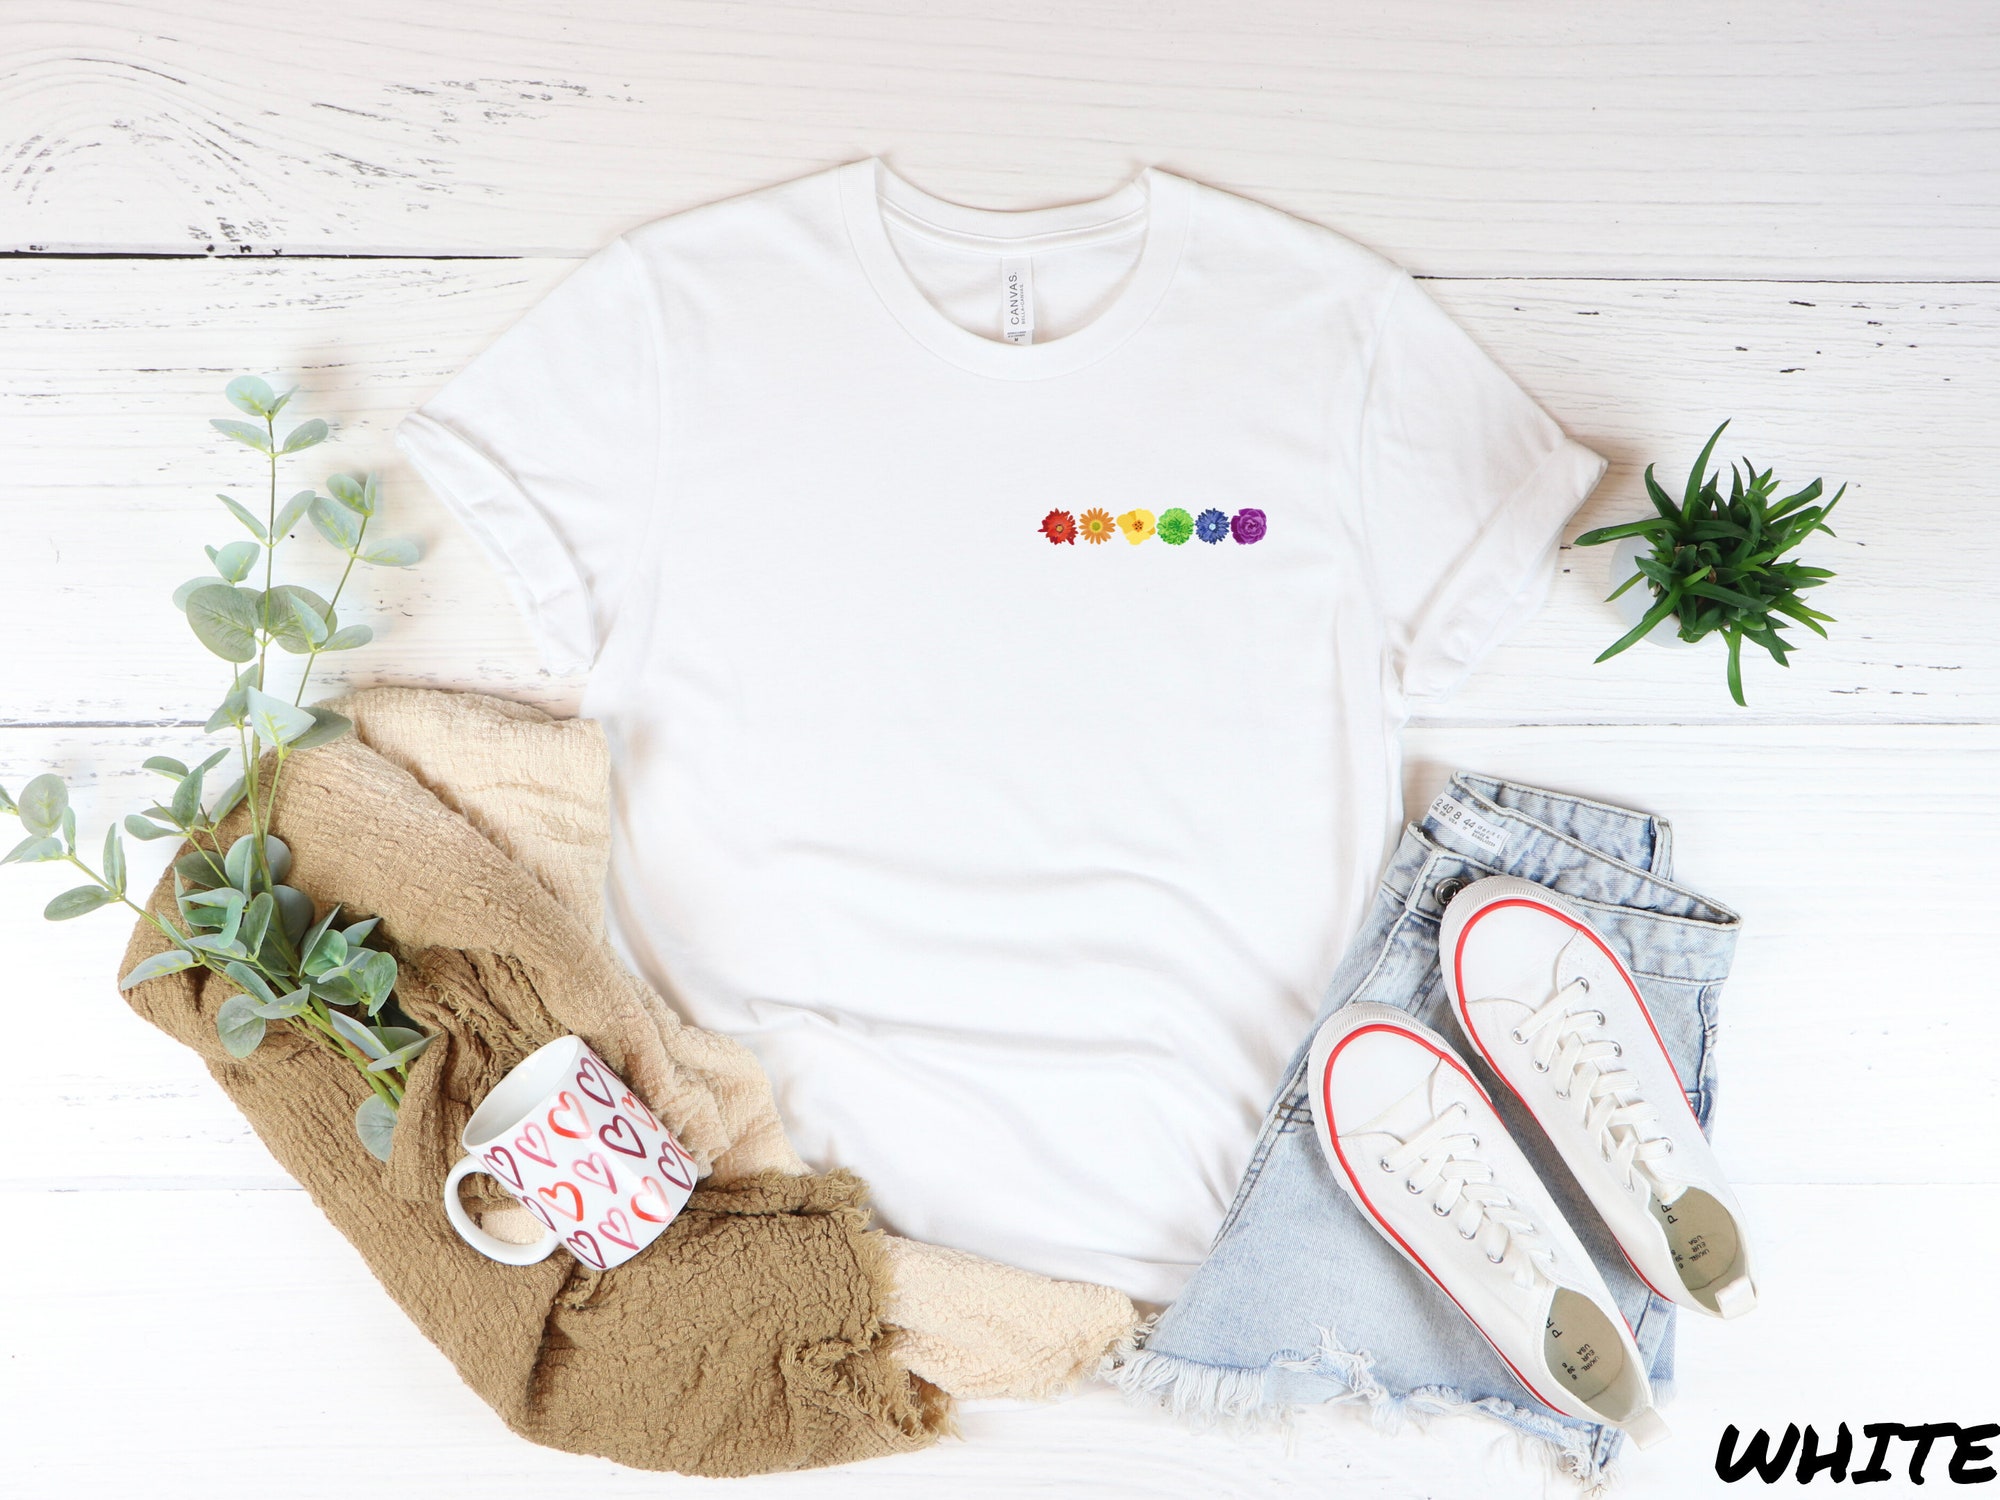 Discover LGBTQ FlowersT-Shirt